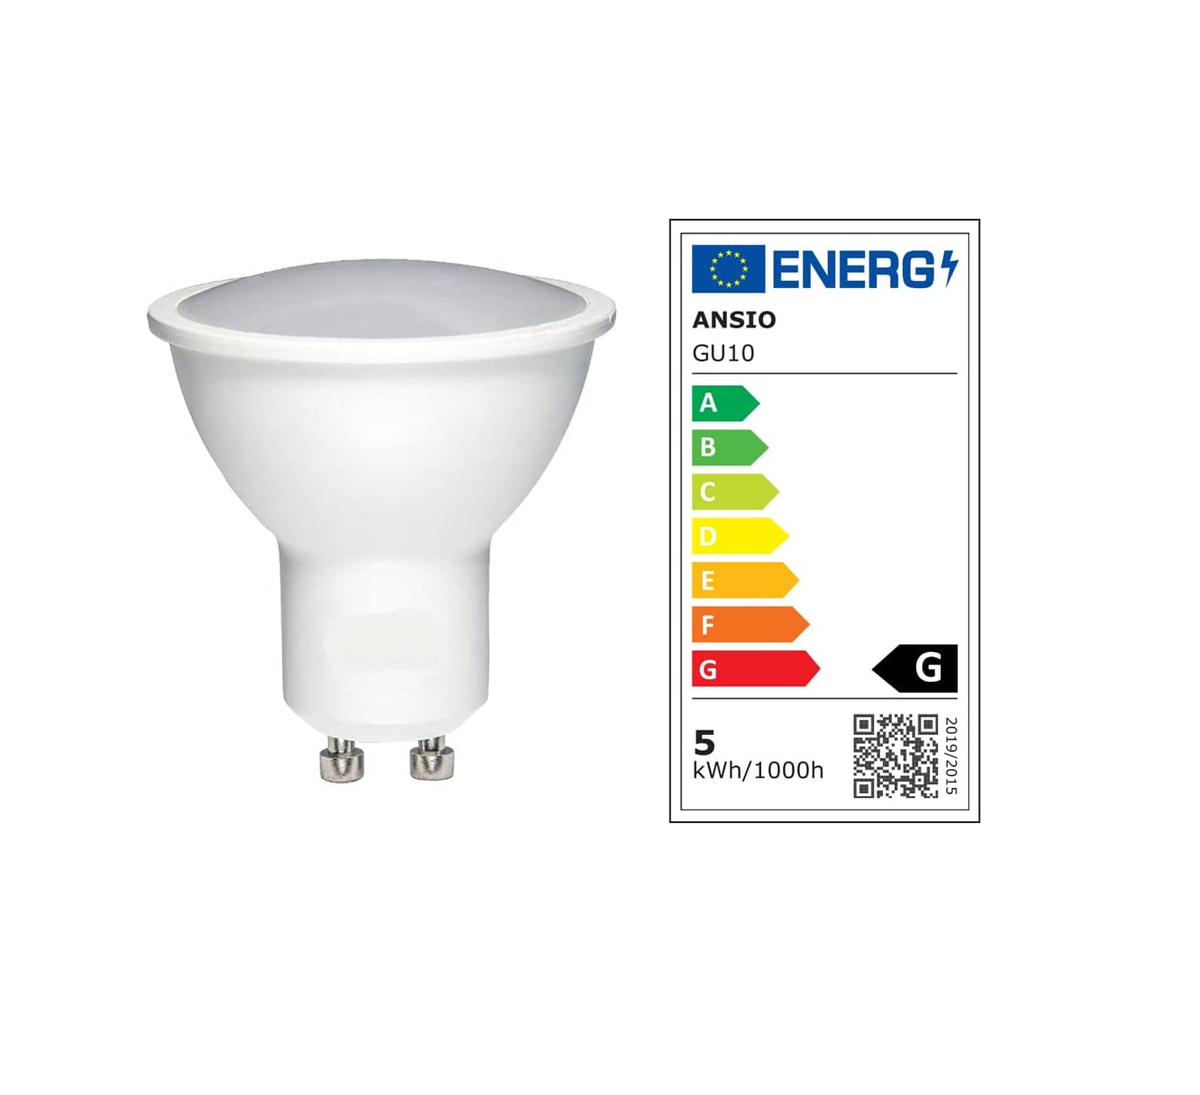 GU10 LED Bulbs Warm White, 3000k, 7W, 37W Halogen Spotlight Bulb Equivalent, Non-dimmable, 350 Lumen, 120° Beam Angle, LED Bulbs Pack of 2